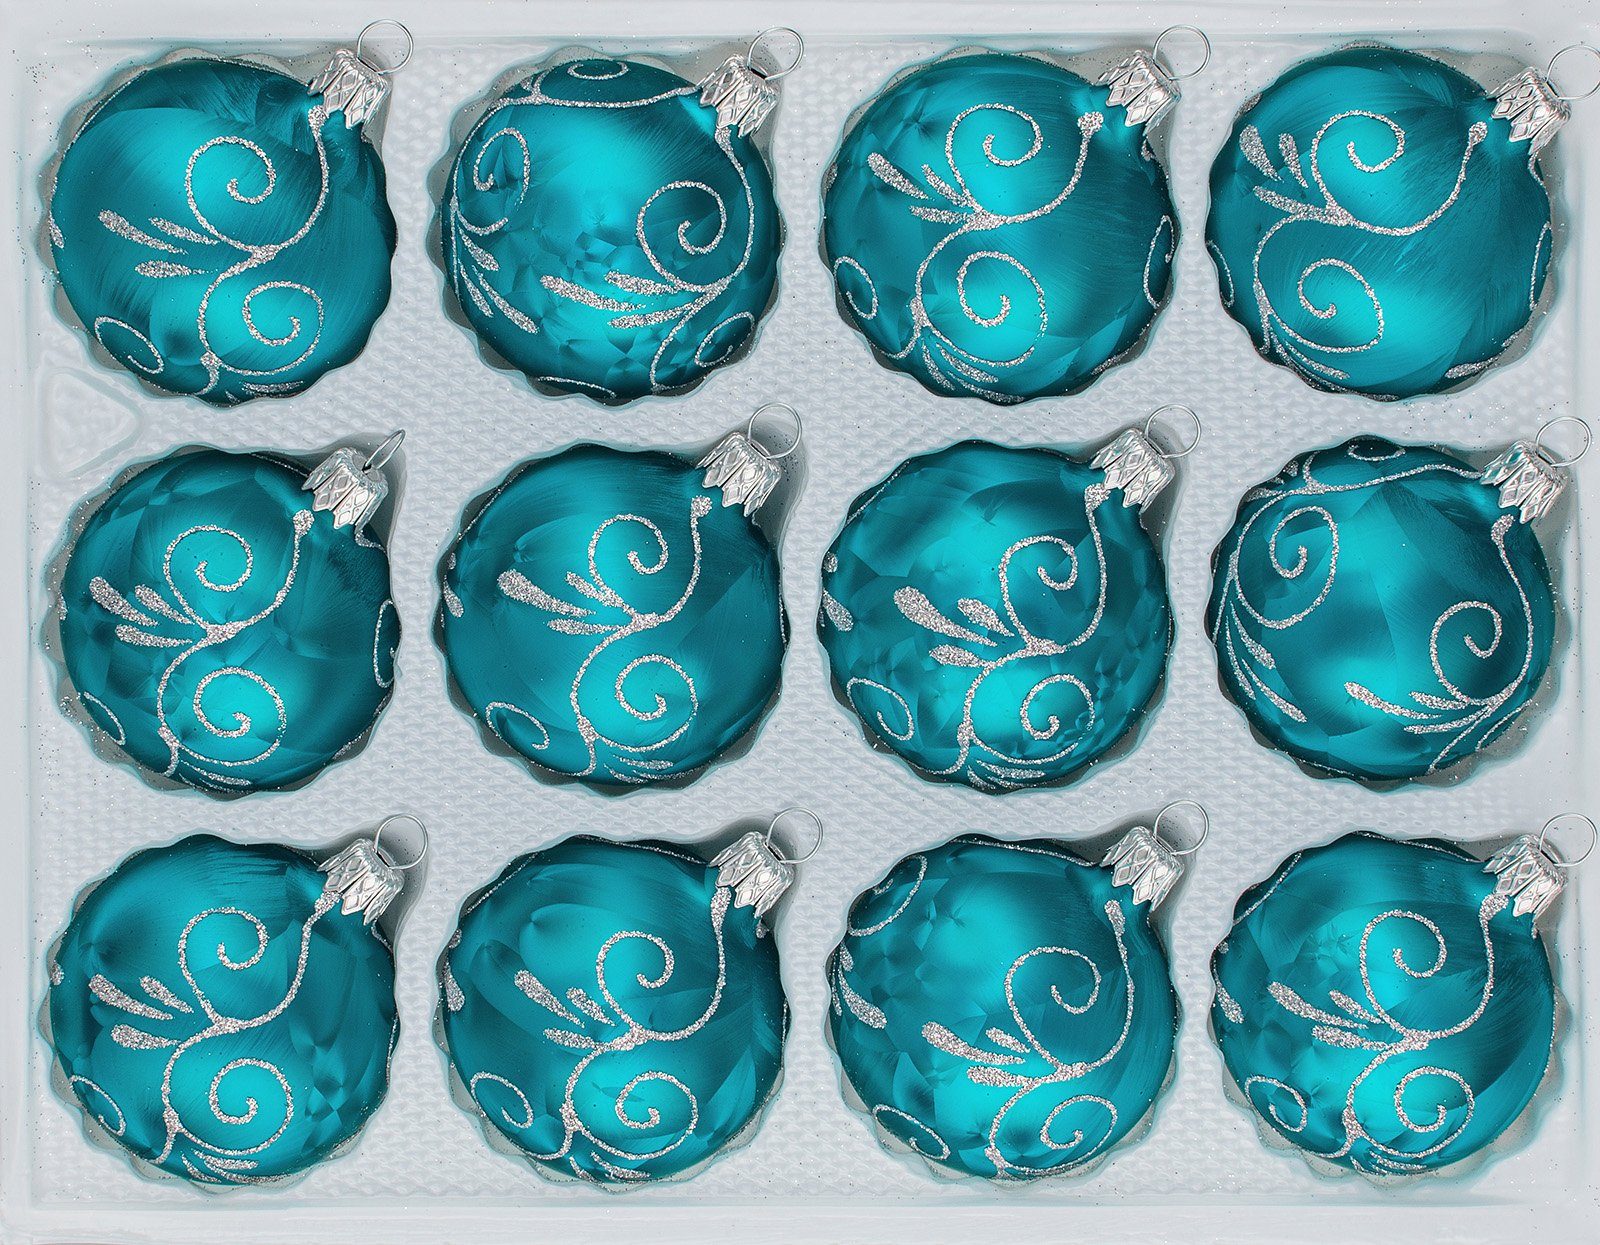 "Ice Weihnachtsbaumkugel Navidacio Set Ornamente" 12tlg. Glas-Weihnachtskugeln Silber Petrol-Türkis